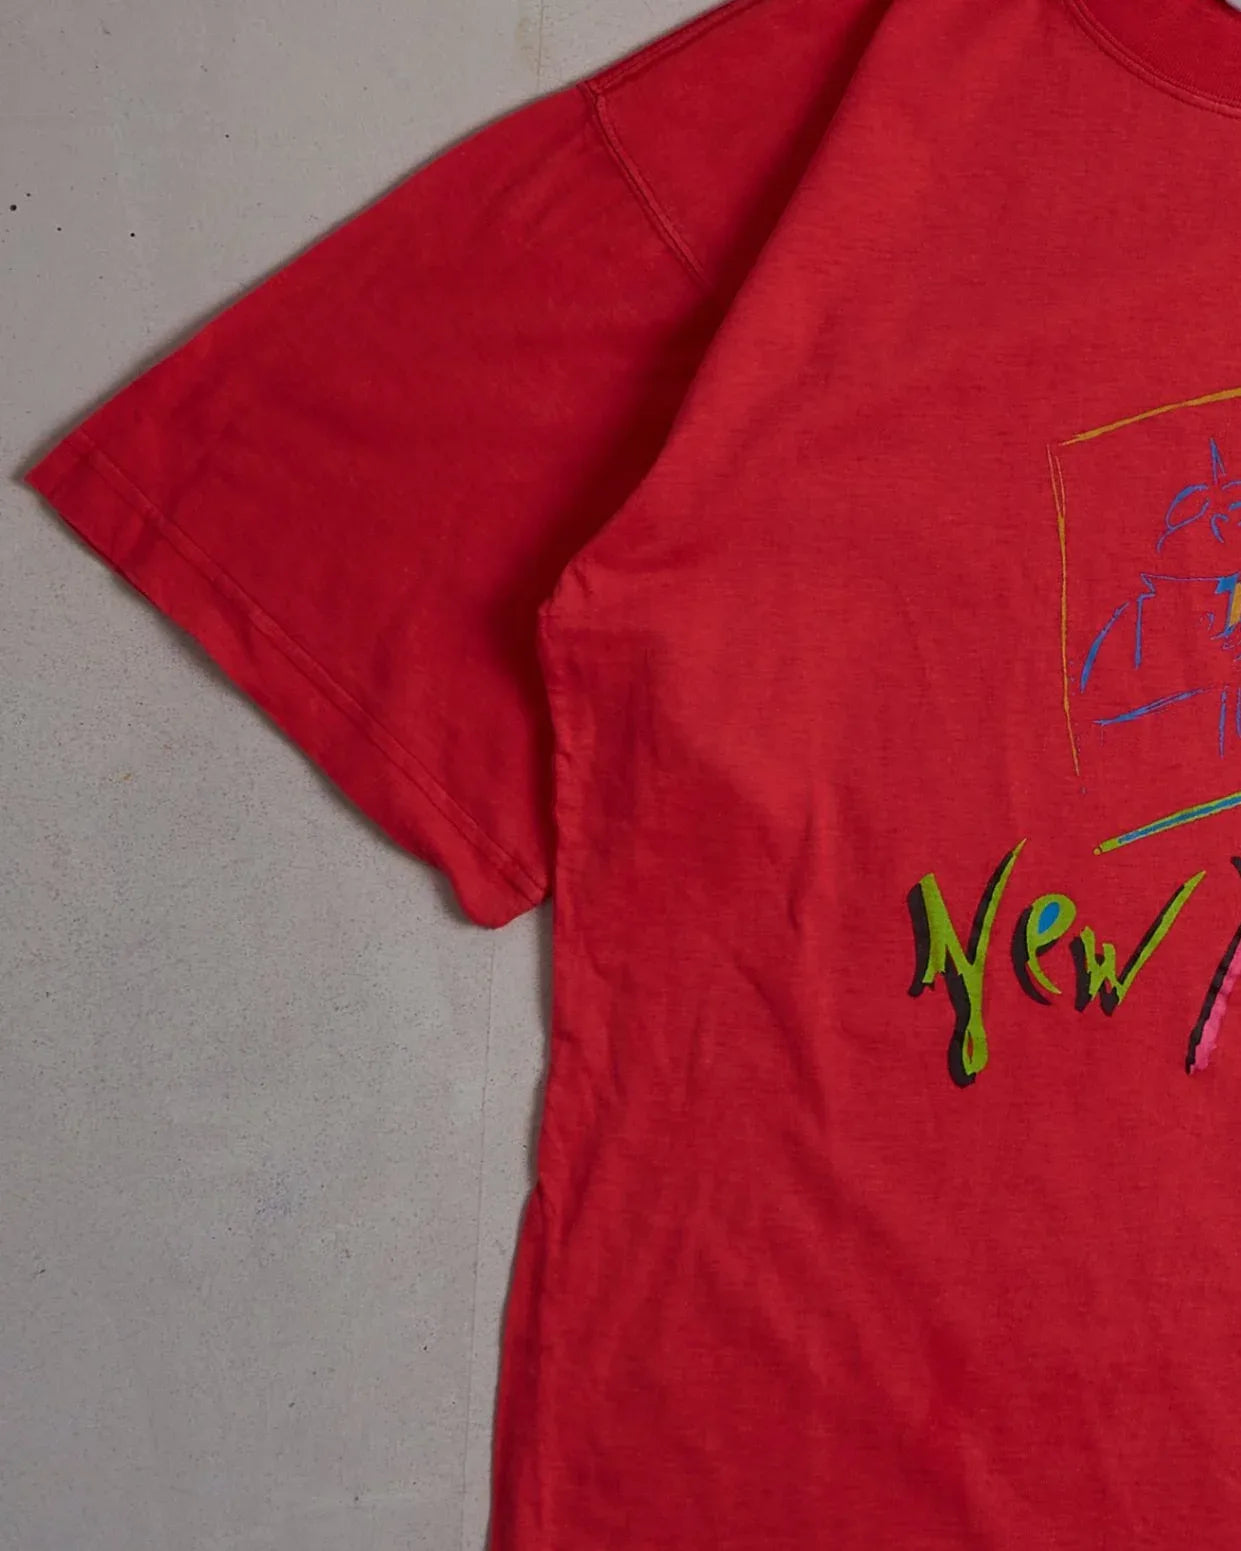 Vintage New York T-Shirt Left